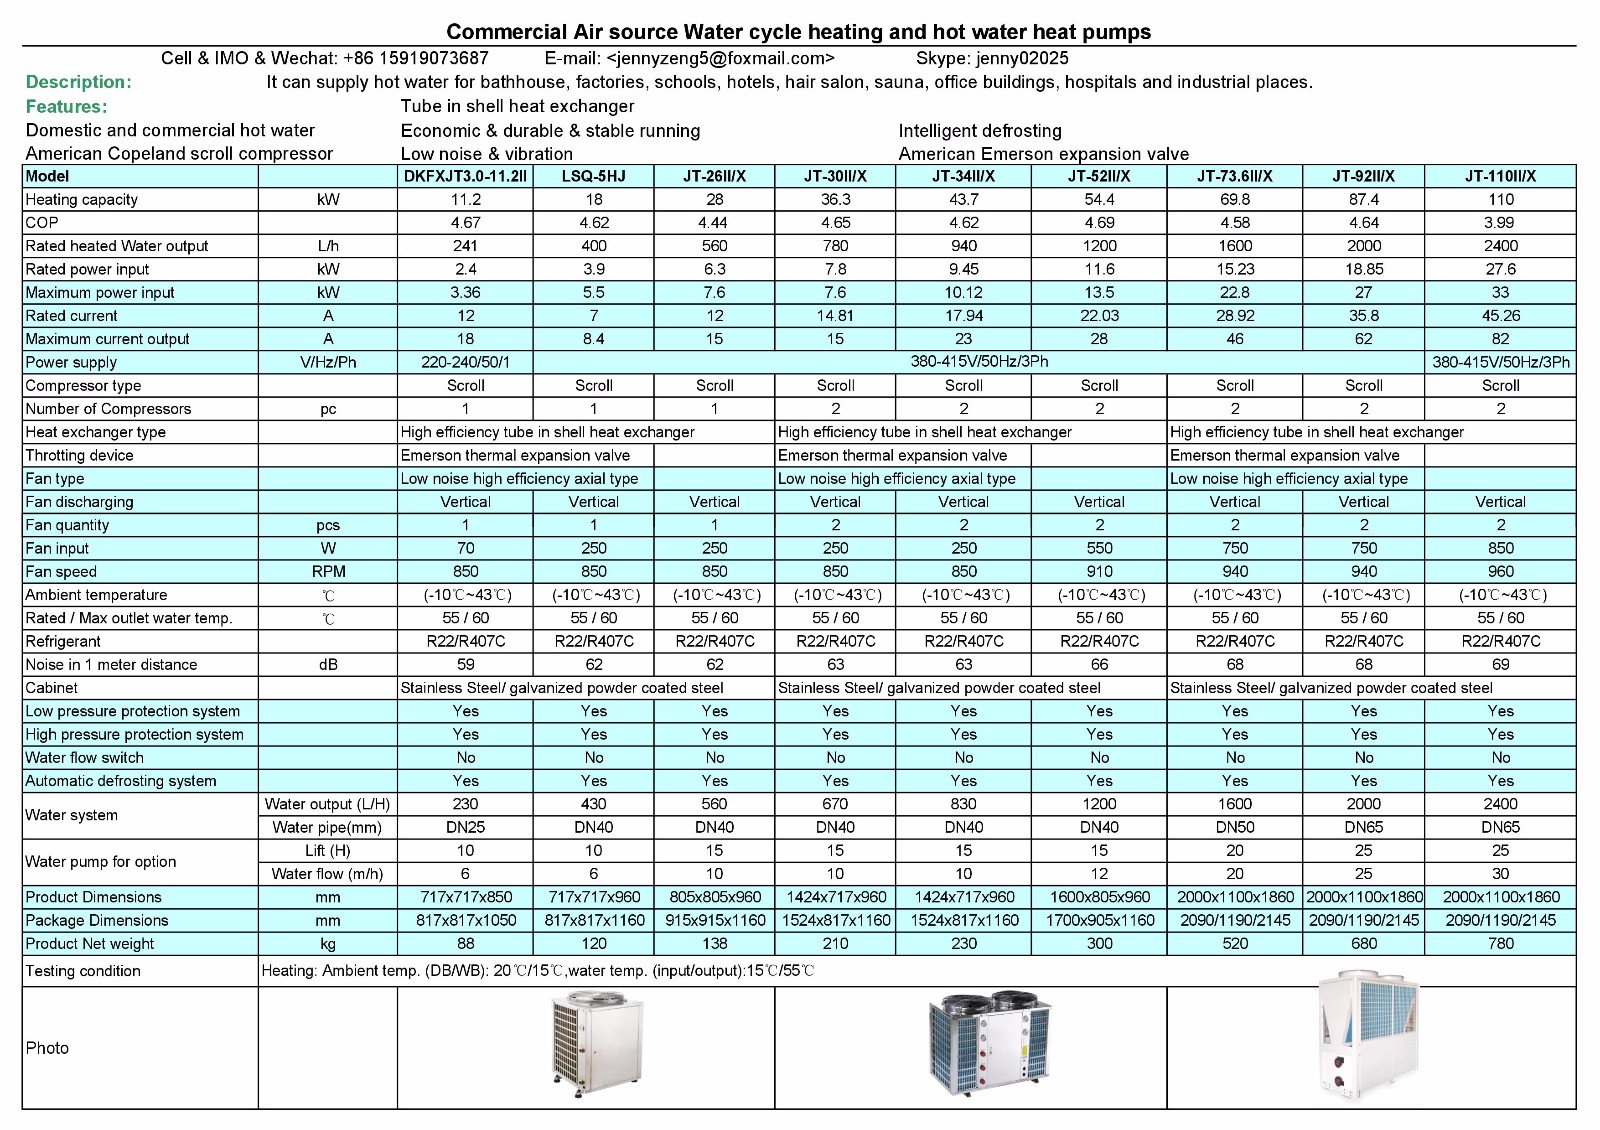 Commercial Air source heat pumps 11-110kw.jpg